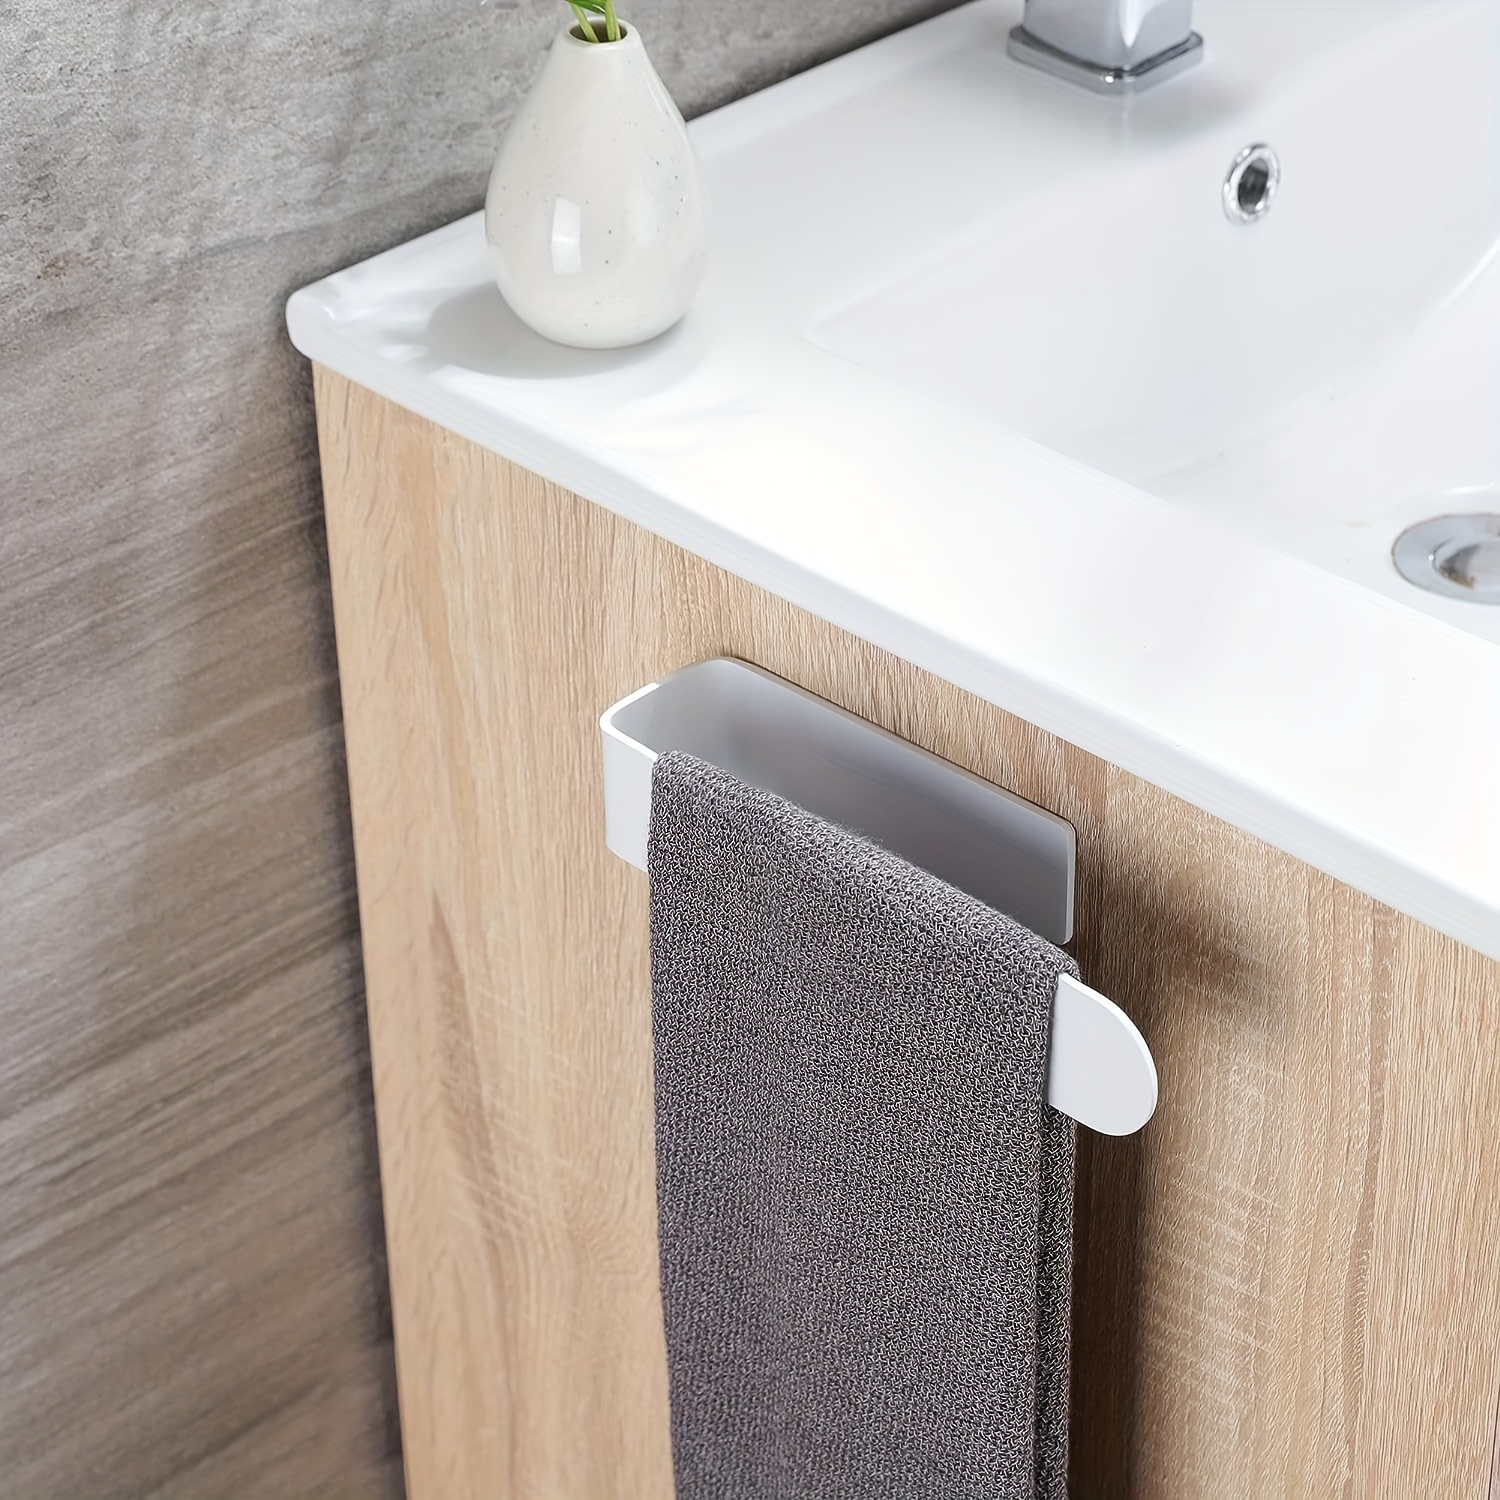 Bathroom Self-adhesive Towel Rack, Kitchen Wall-mounted Hand Towel Holder